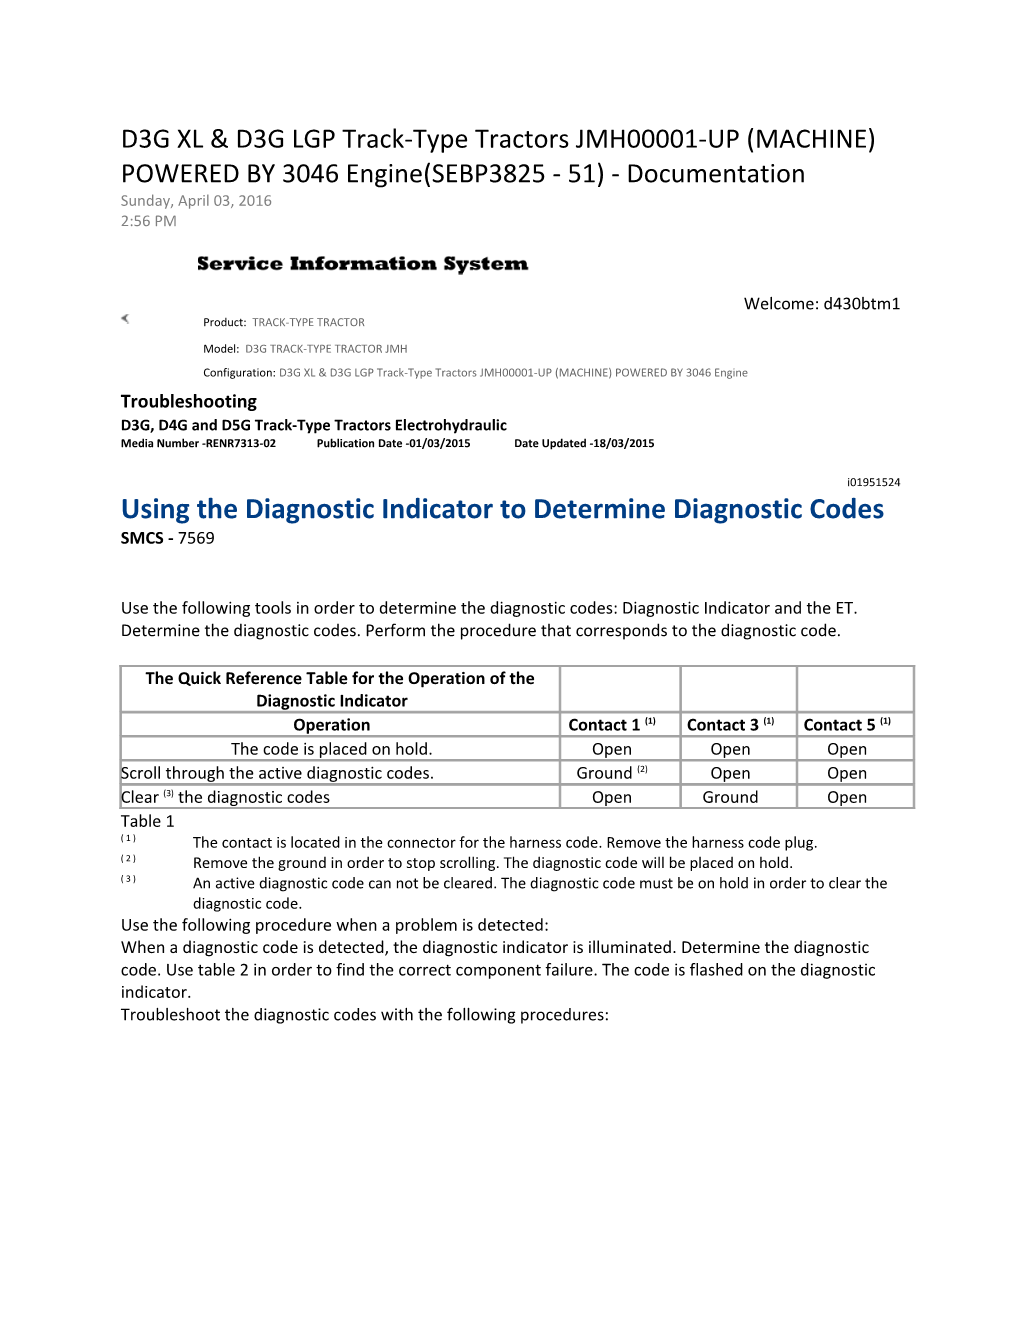 Using the Diagnostic Indicator to Determine Diagnostic Codes